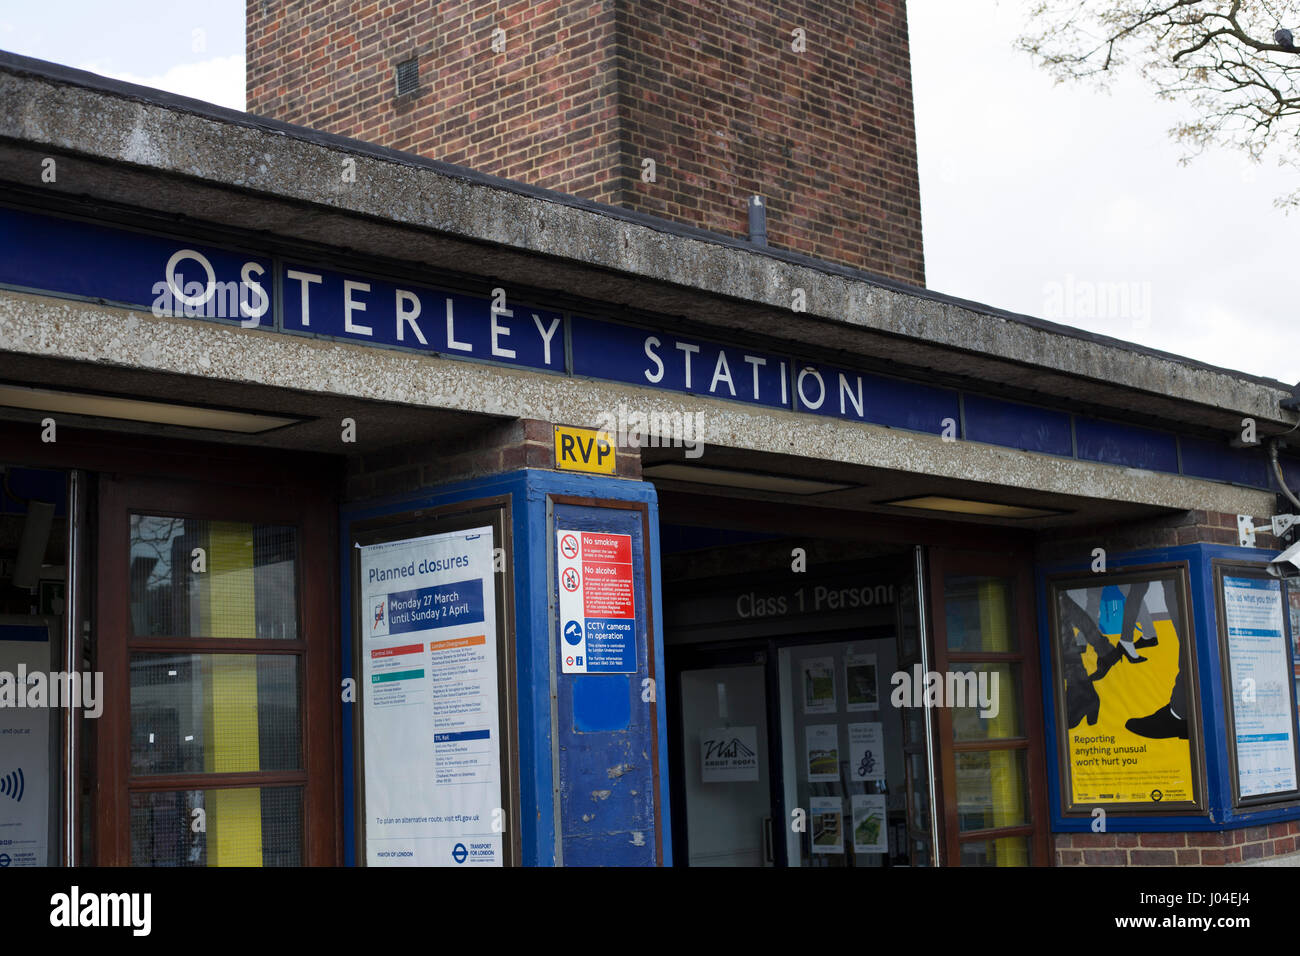 Osterley Station, London. Stockfoto